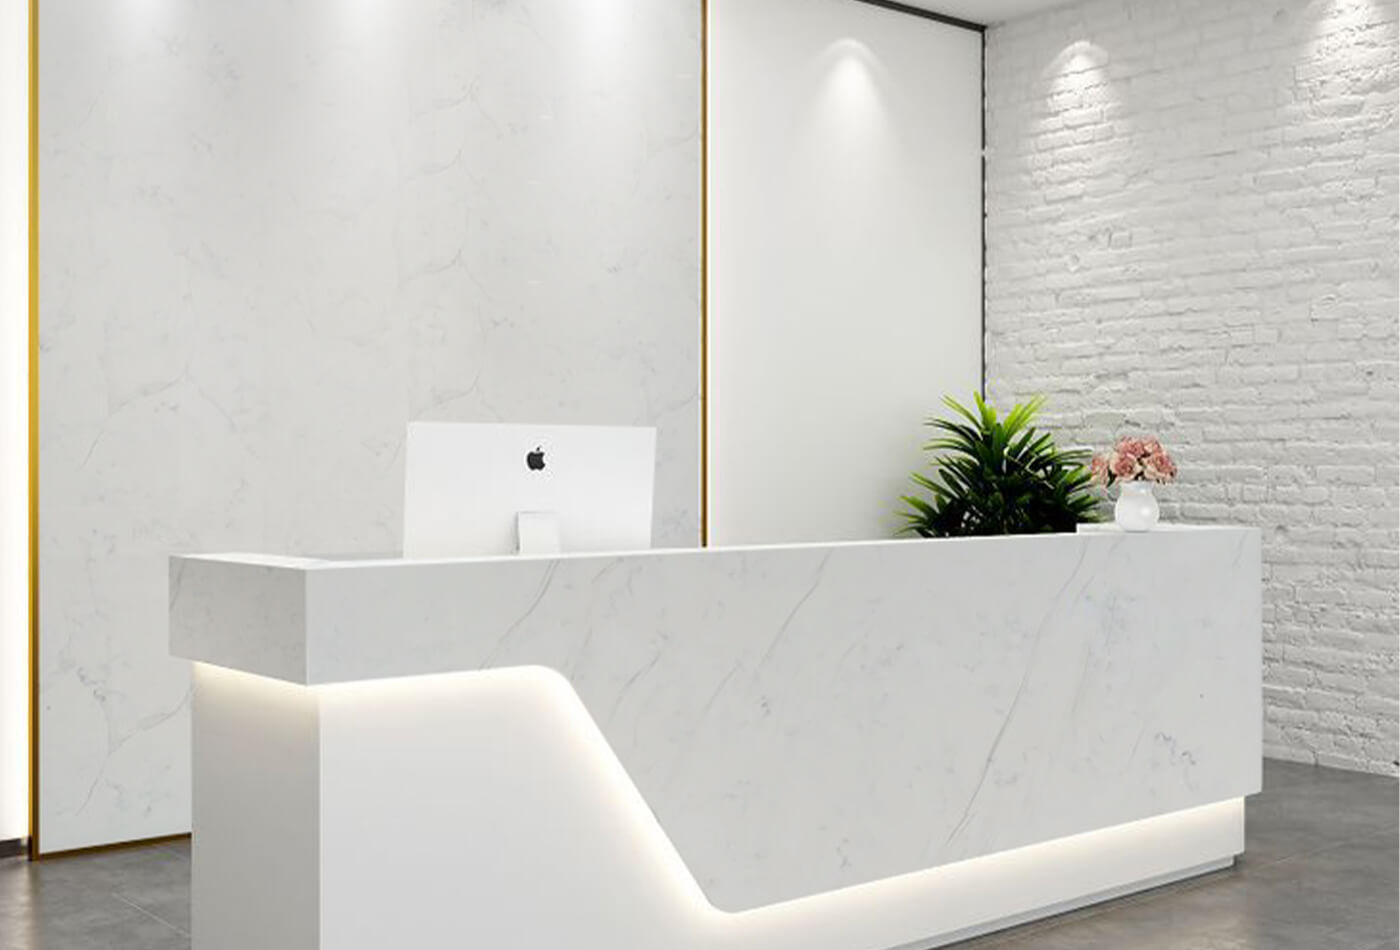 Office Interior Via Delicate Carrara Quartz